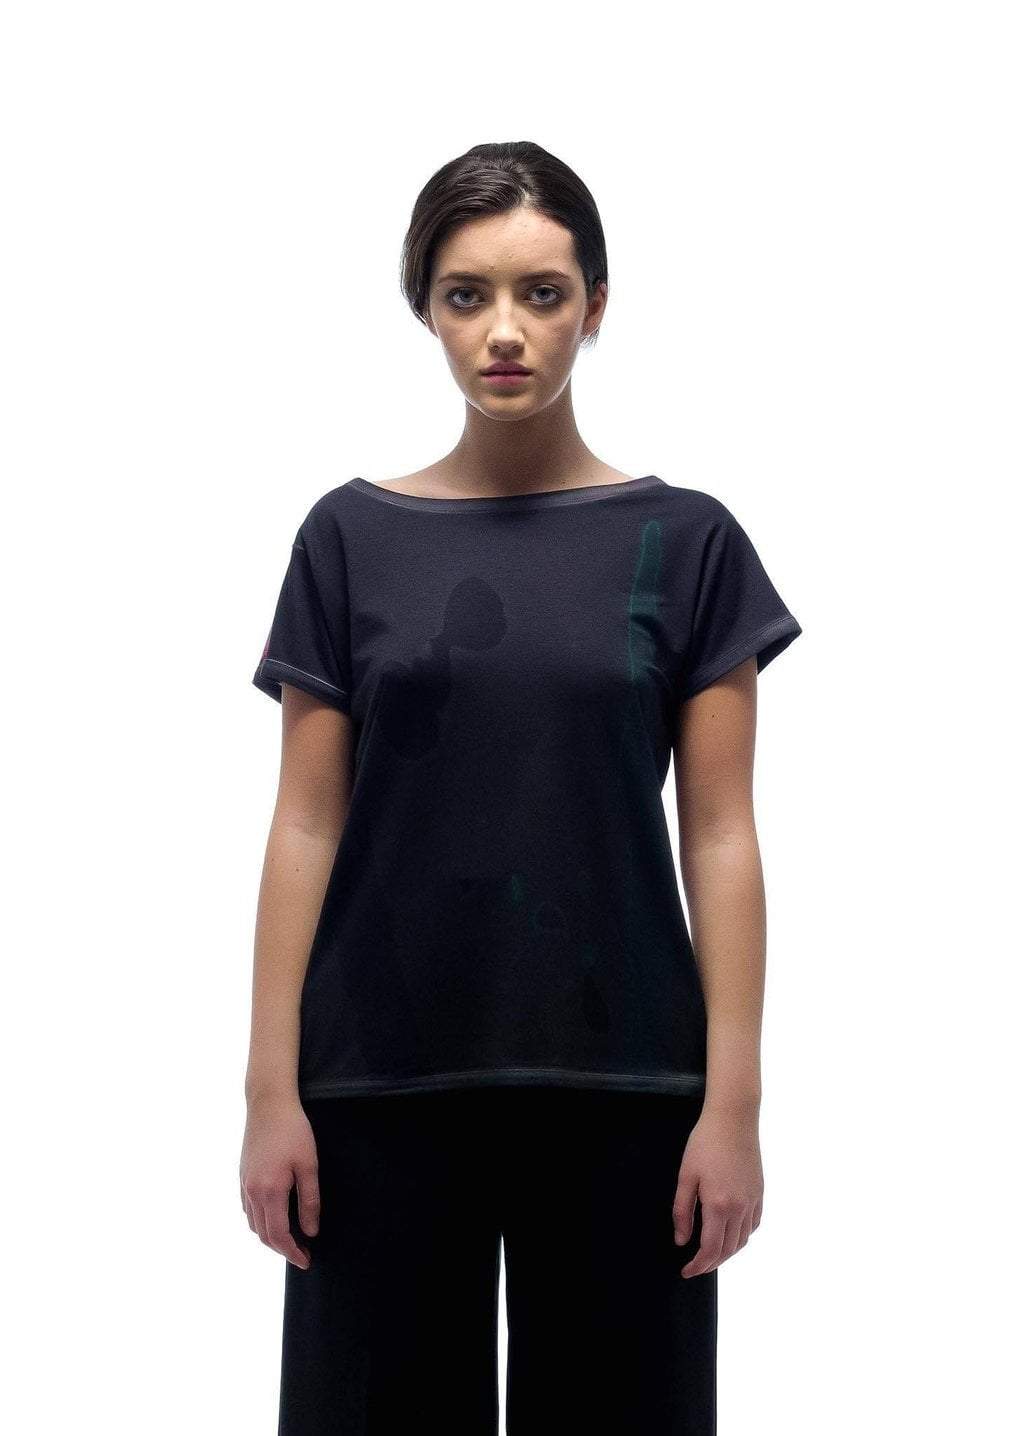 Hilda Maha #3 - Uztzu Clothing - Shop Super 4 in 1 T-shirts, Pants and hoodies online!